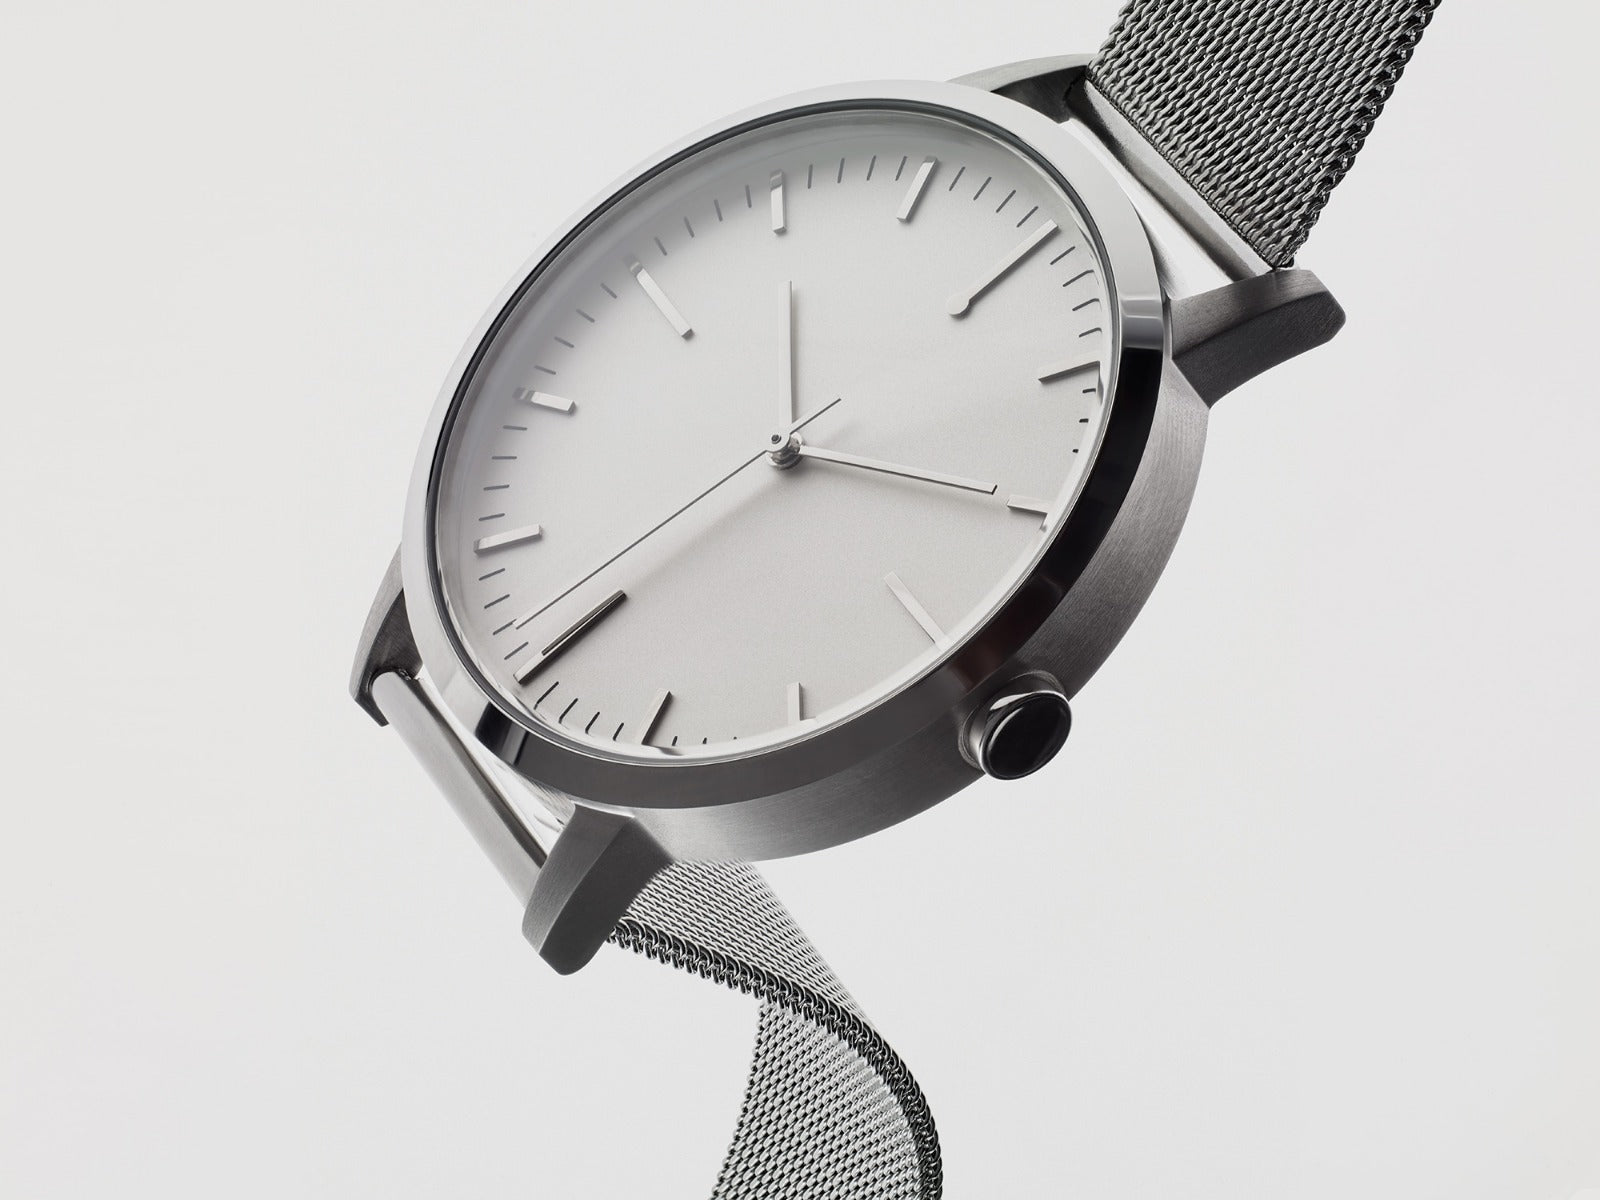 Silver Mesh Watch - Freedom To Exist - Ben Swanson - Unbranded Minimal No Logo